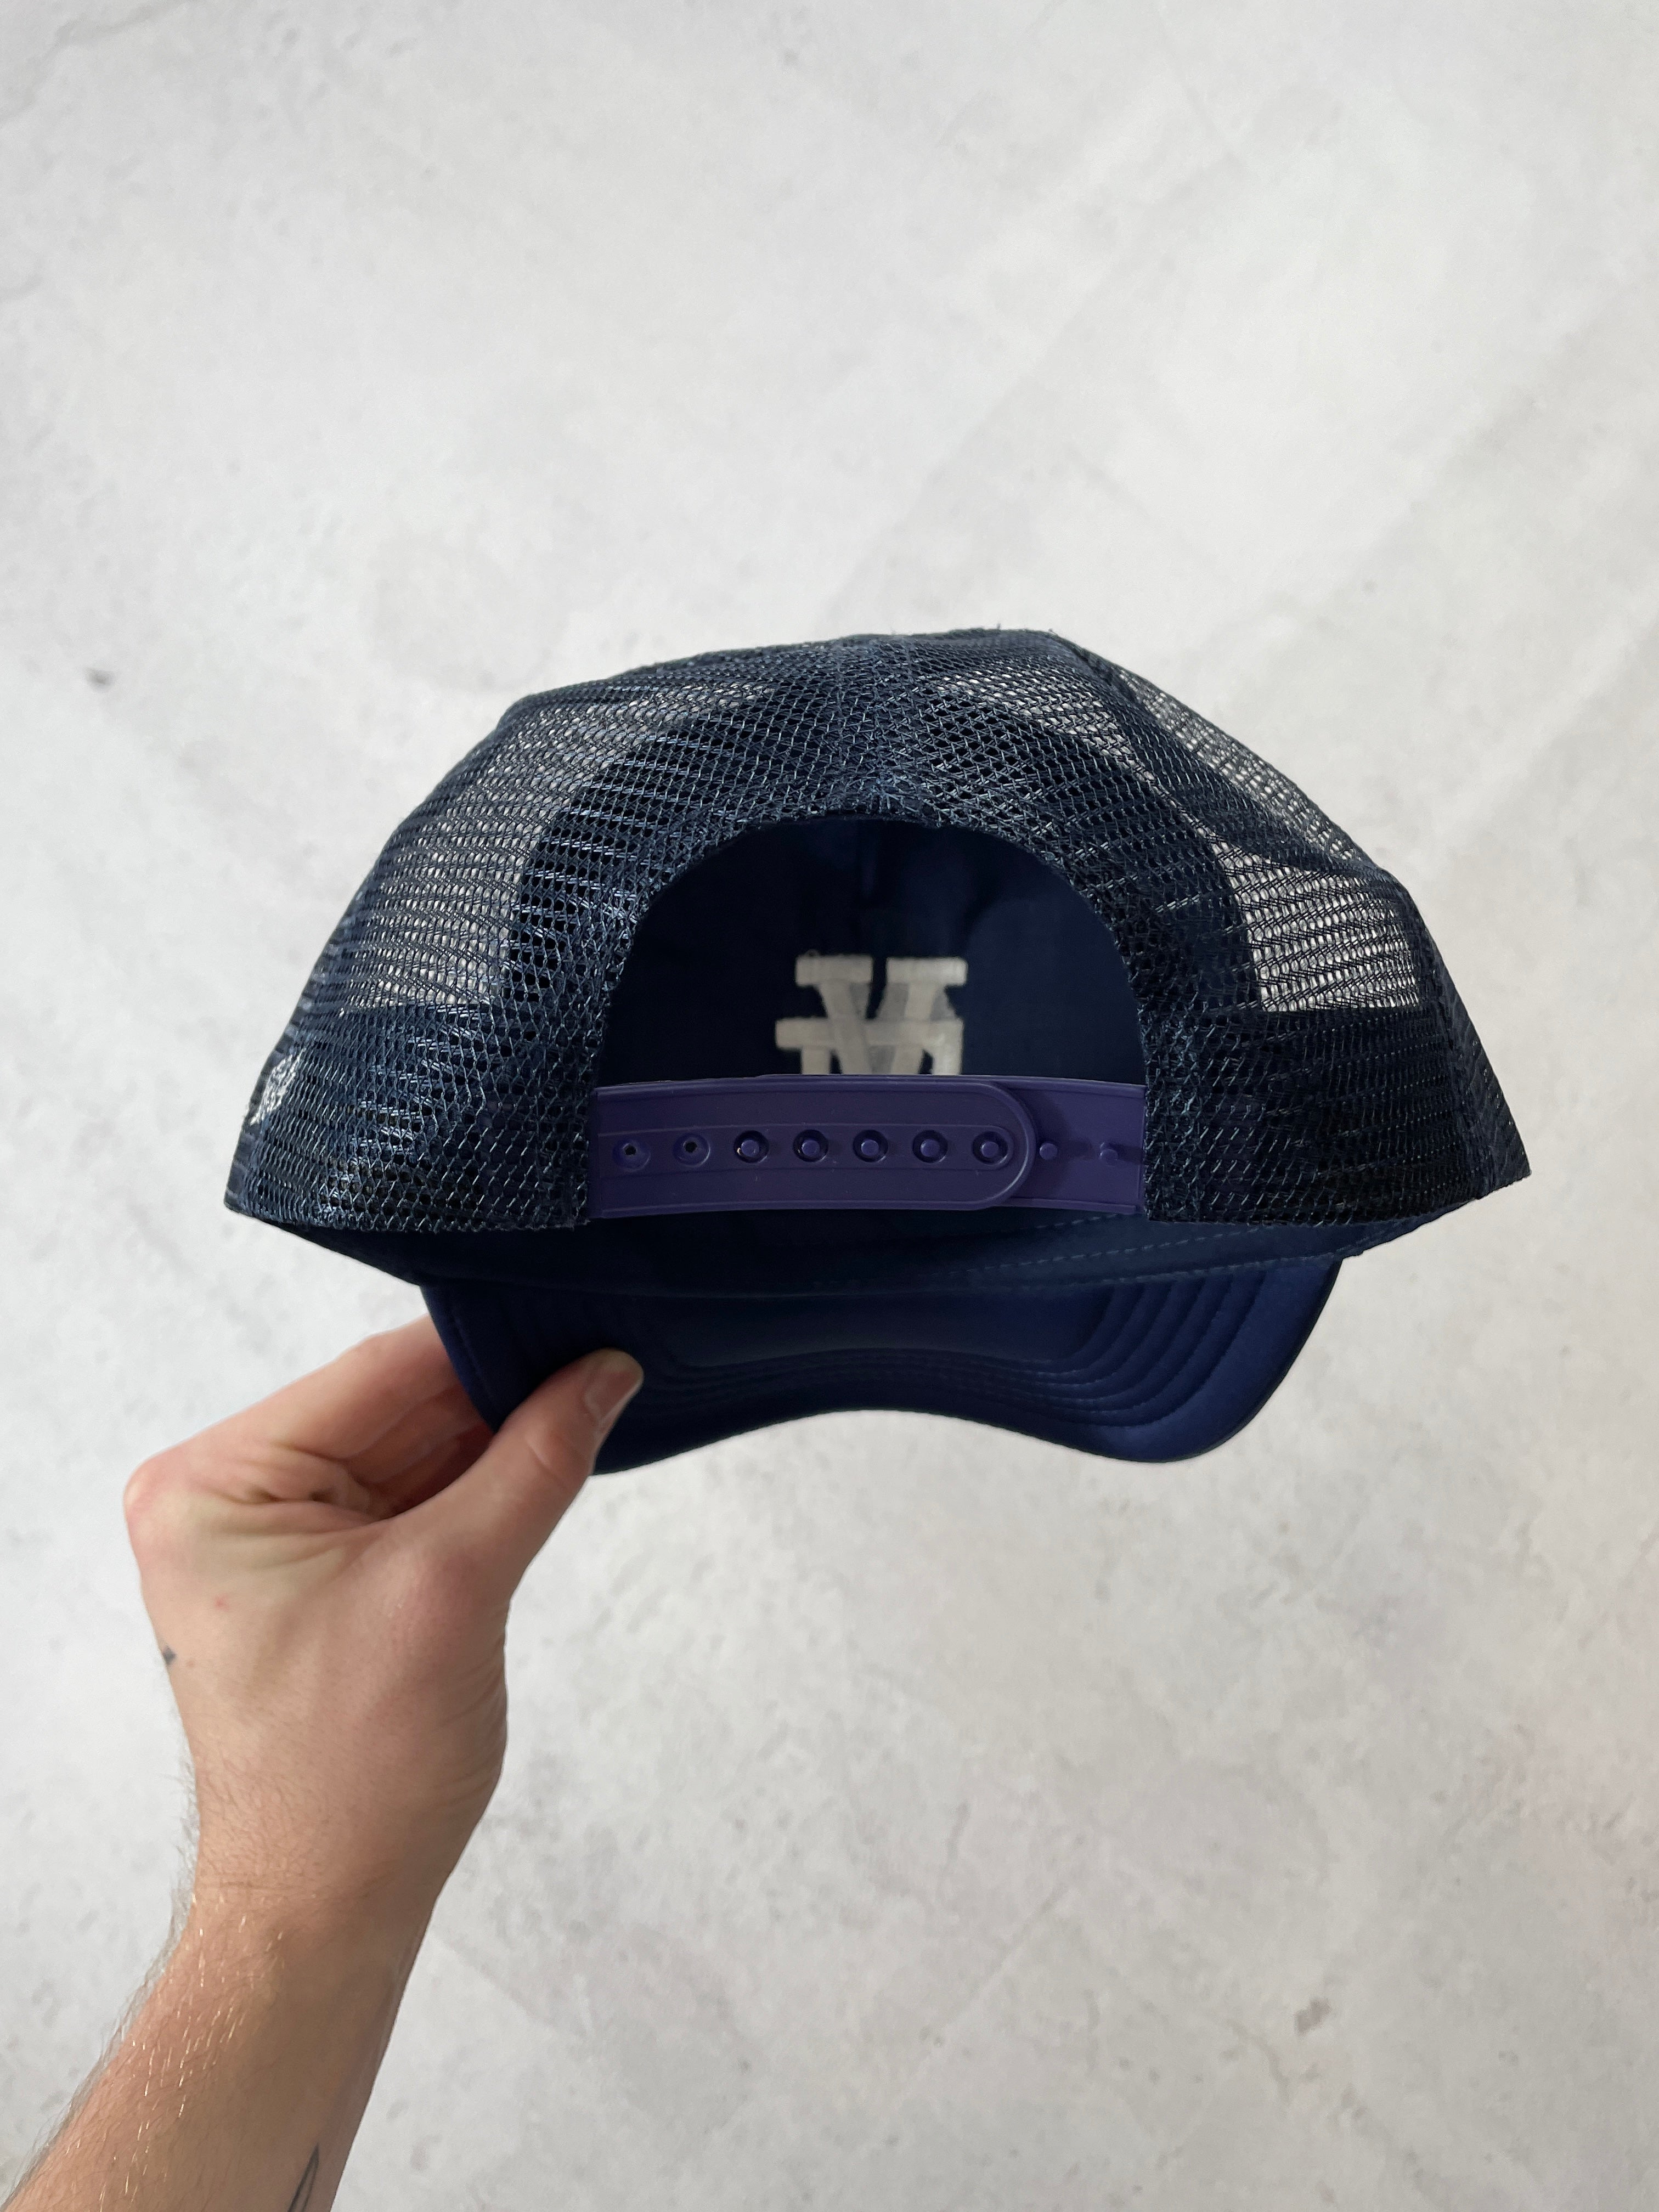 Vibn Studios x LA Trucker Hat